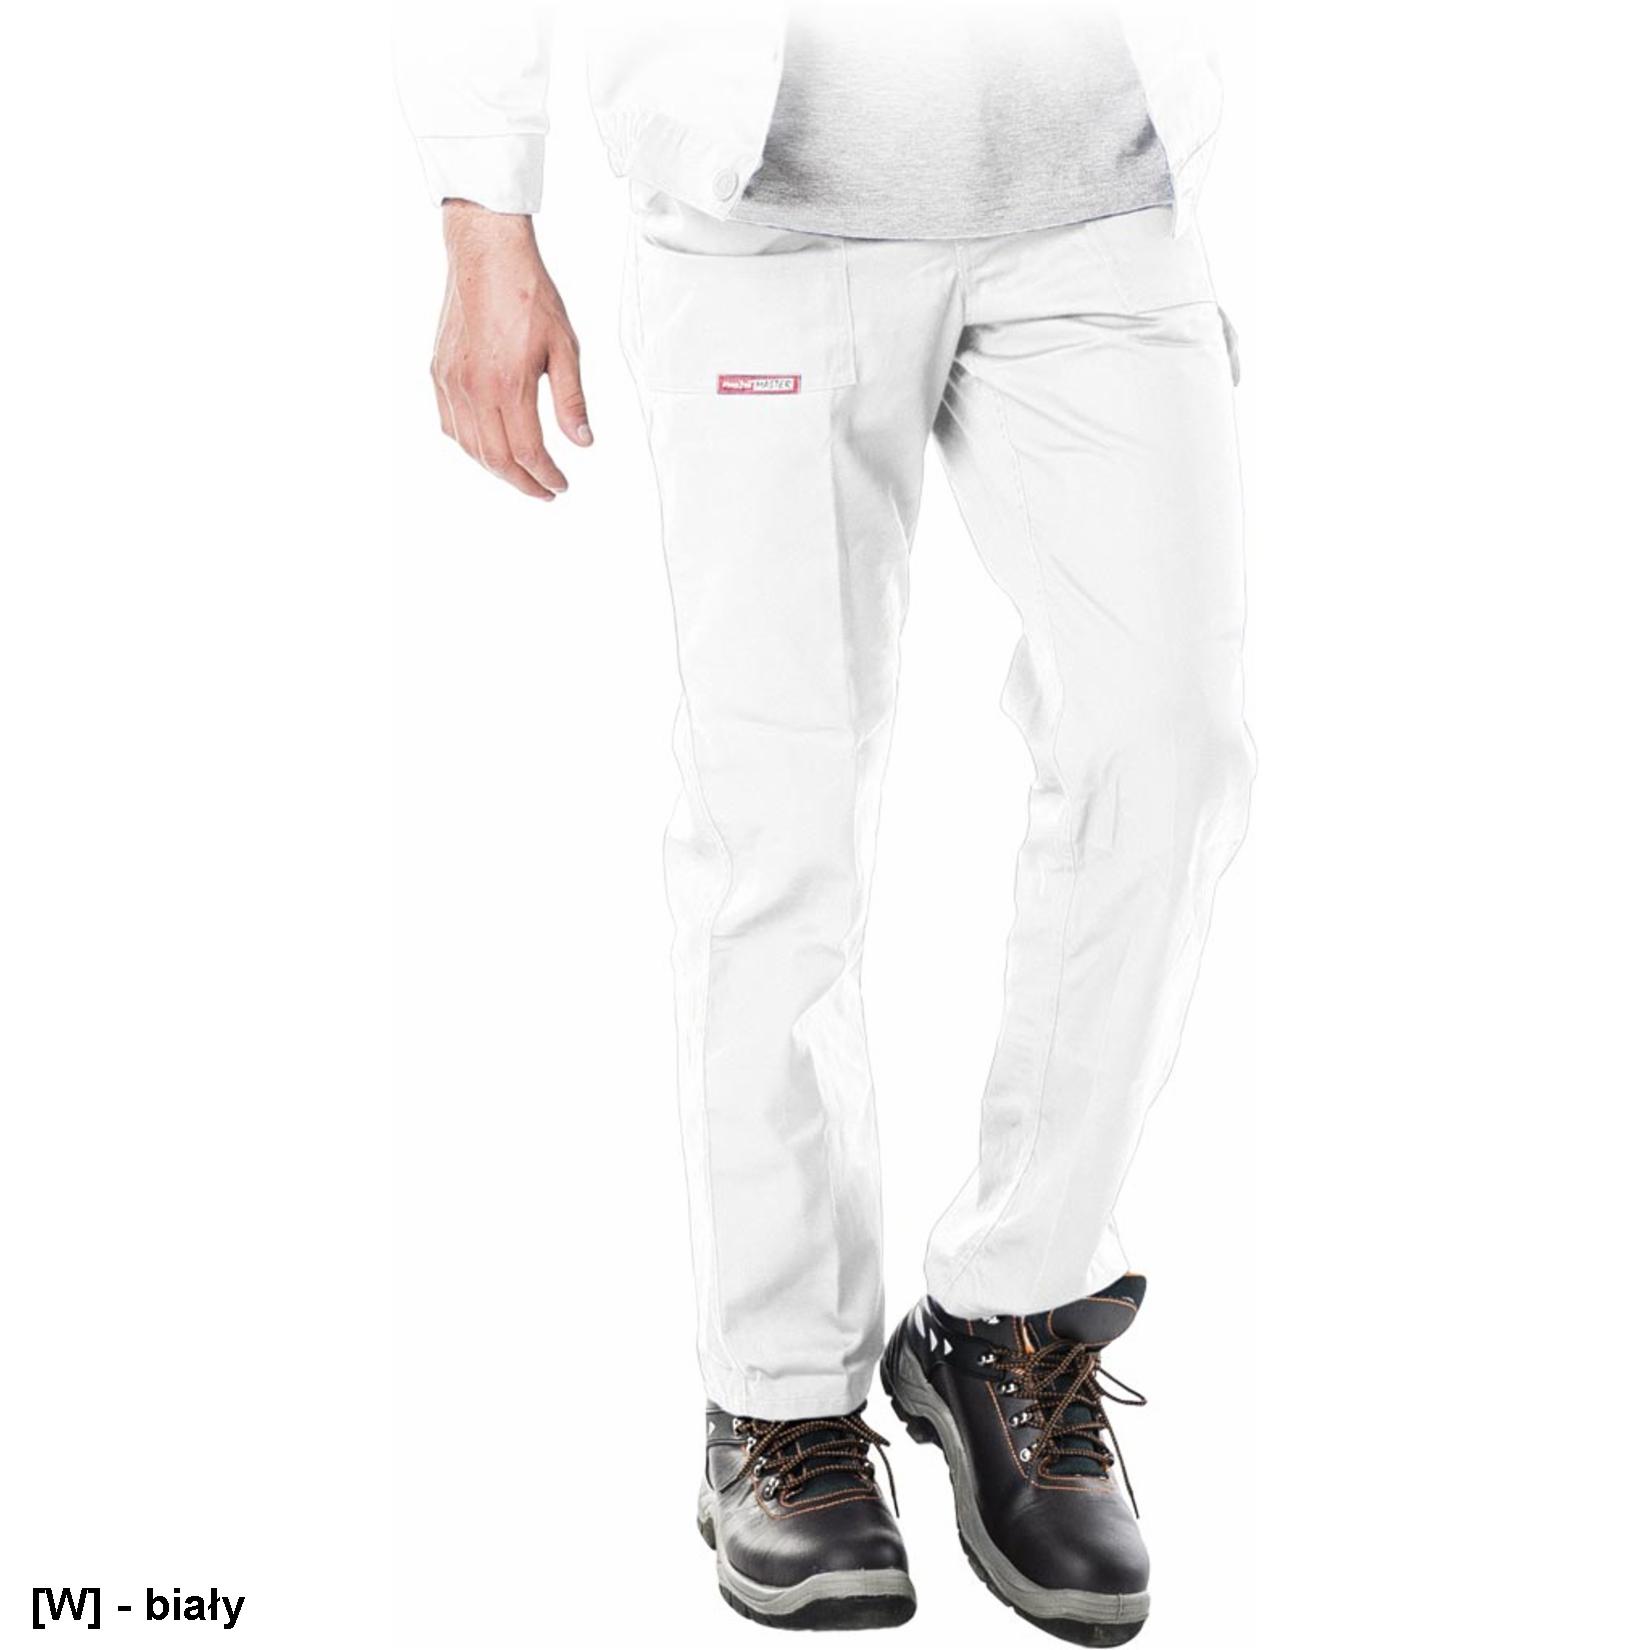 SPM - master spodnie ochronne do pasa - 6 kolorów - 48-62.